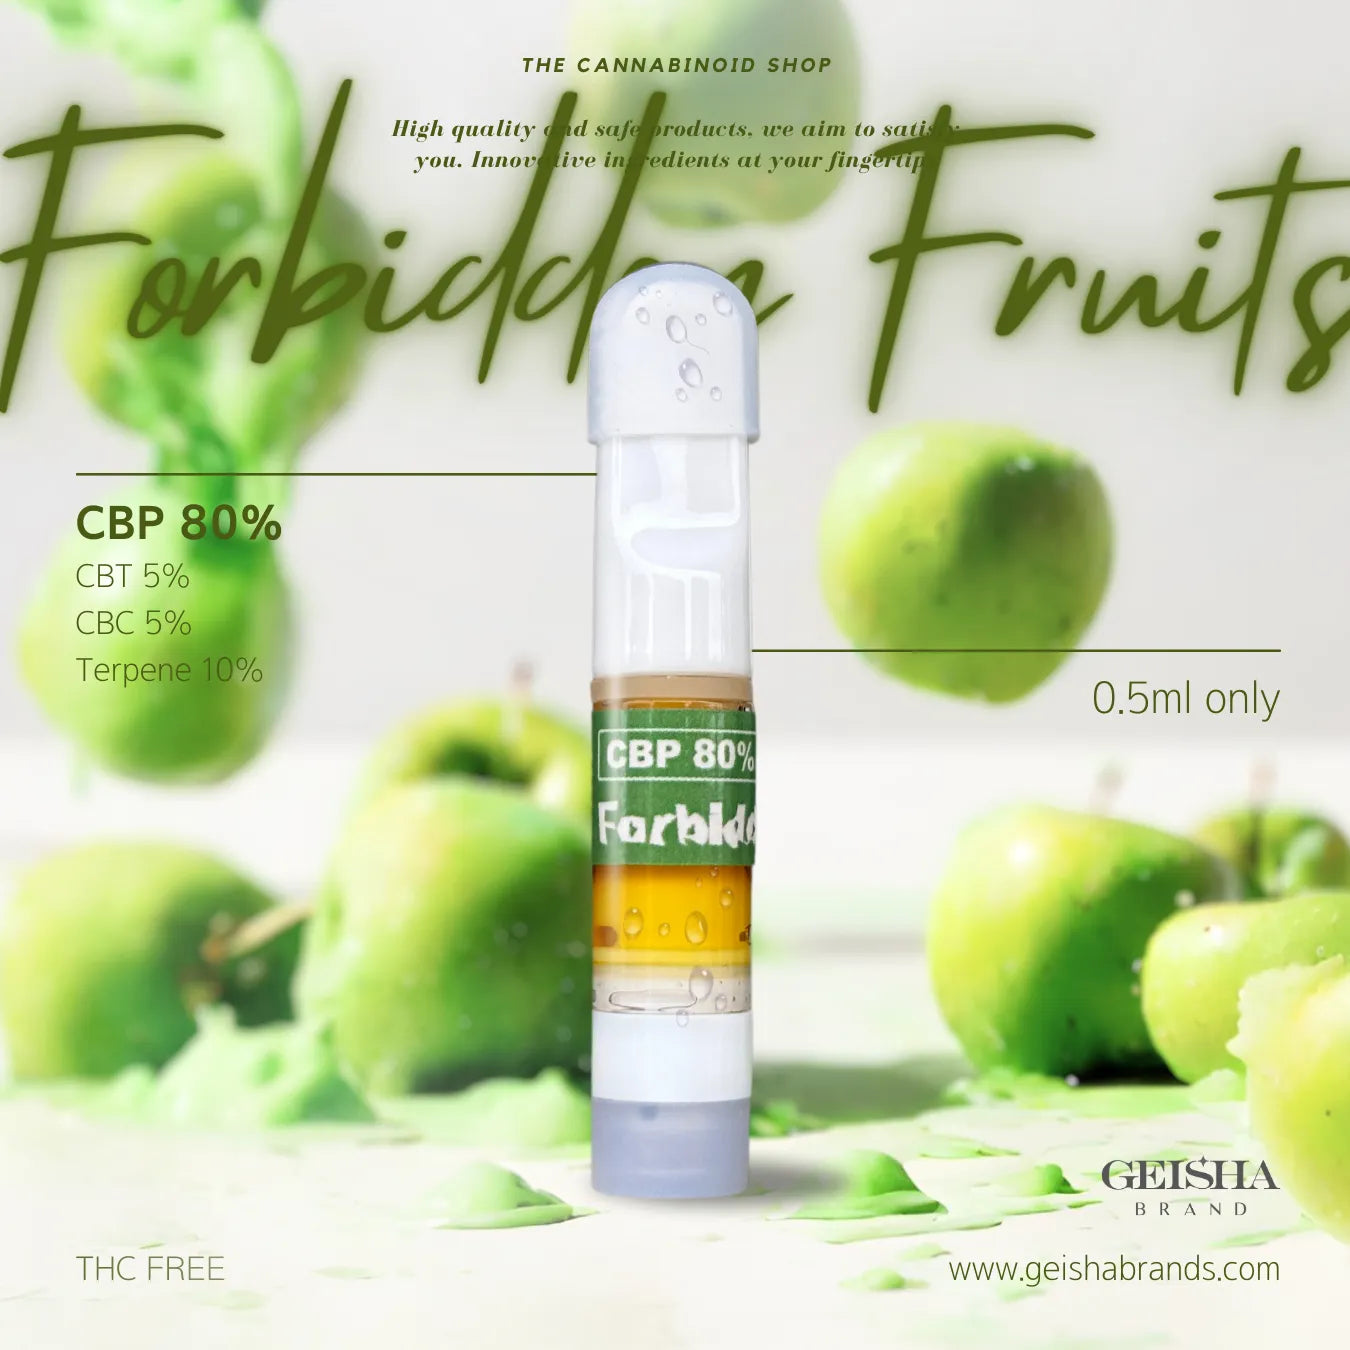 Forbidden Fruit CBP 80%